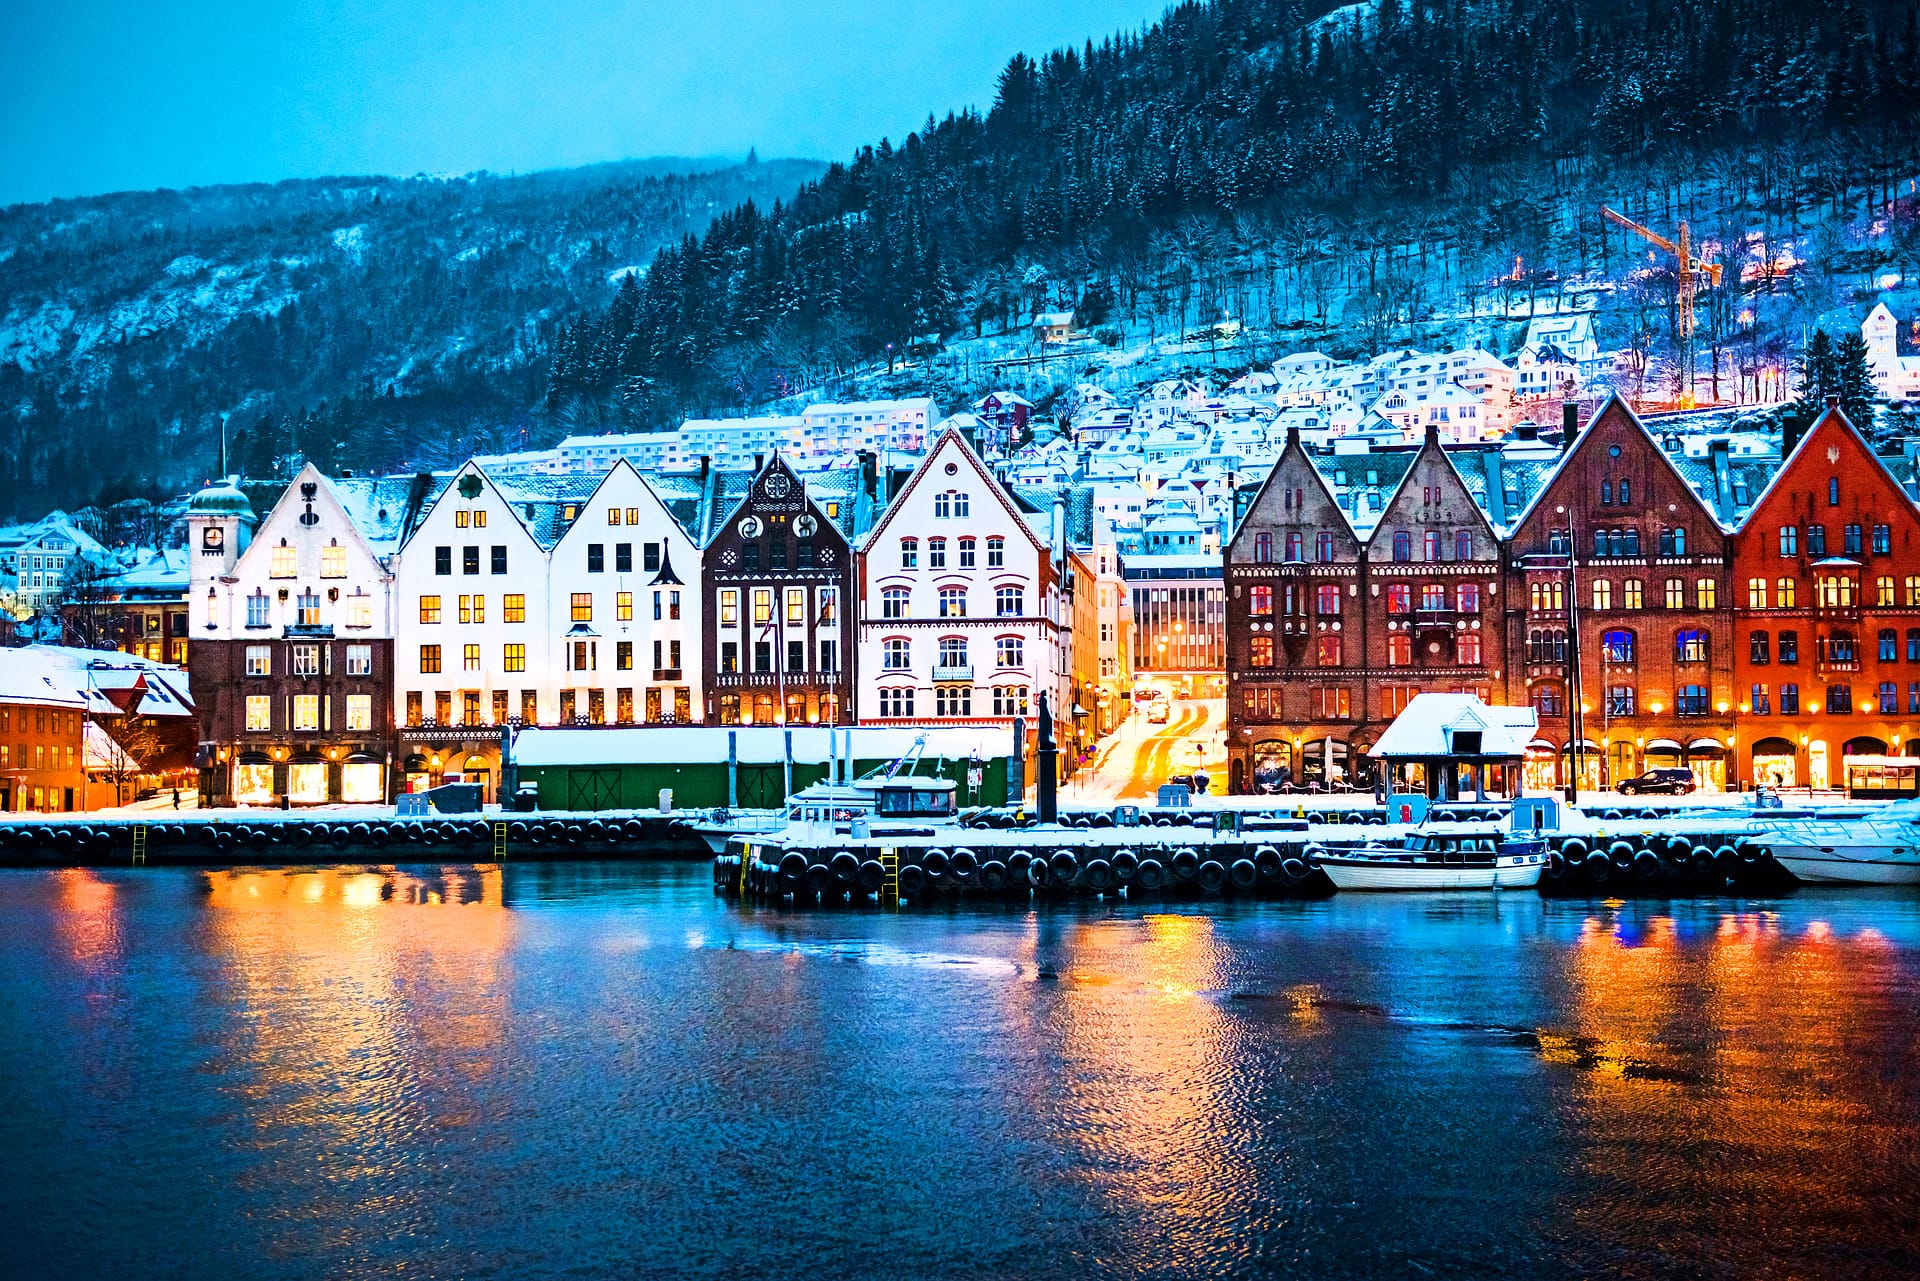 night view on historical buildings in Bryggen- Hanseatic wharf in Bergen, Norway. UNESCO World Heritage Site. Winter view